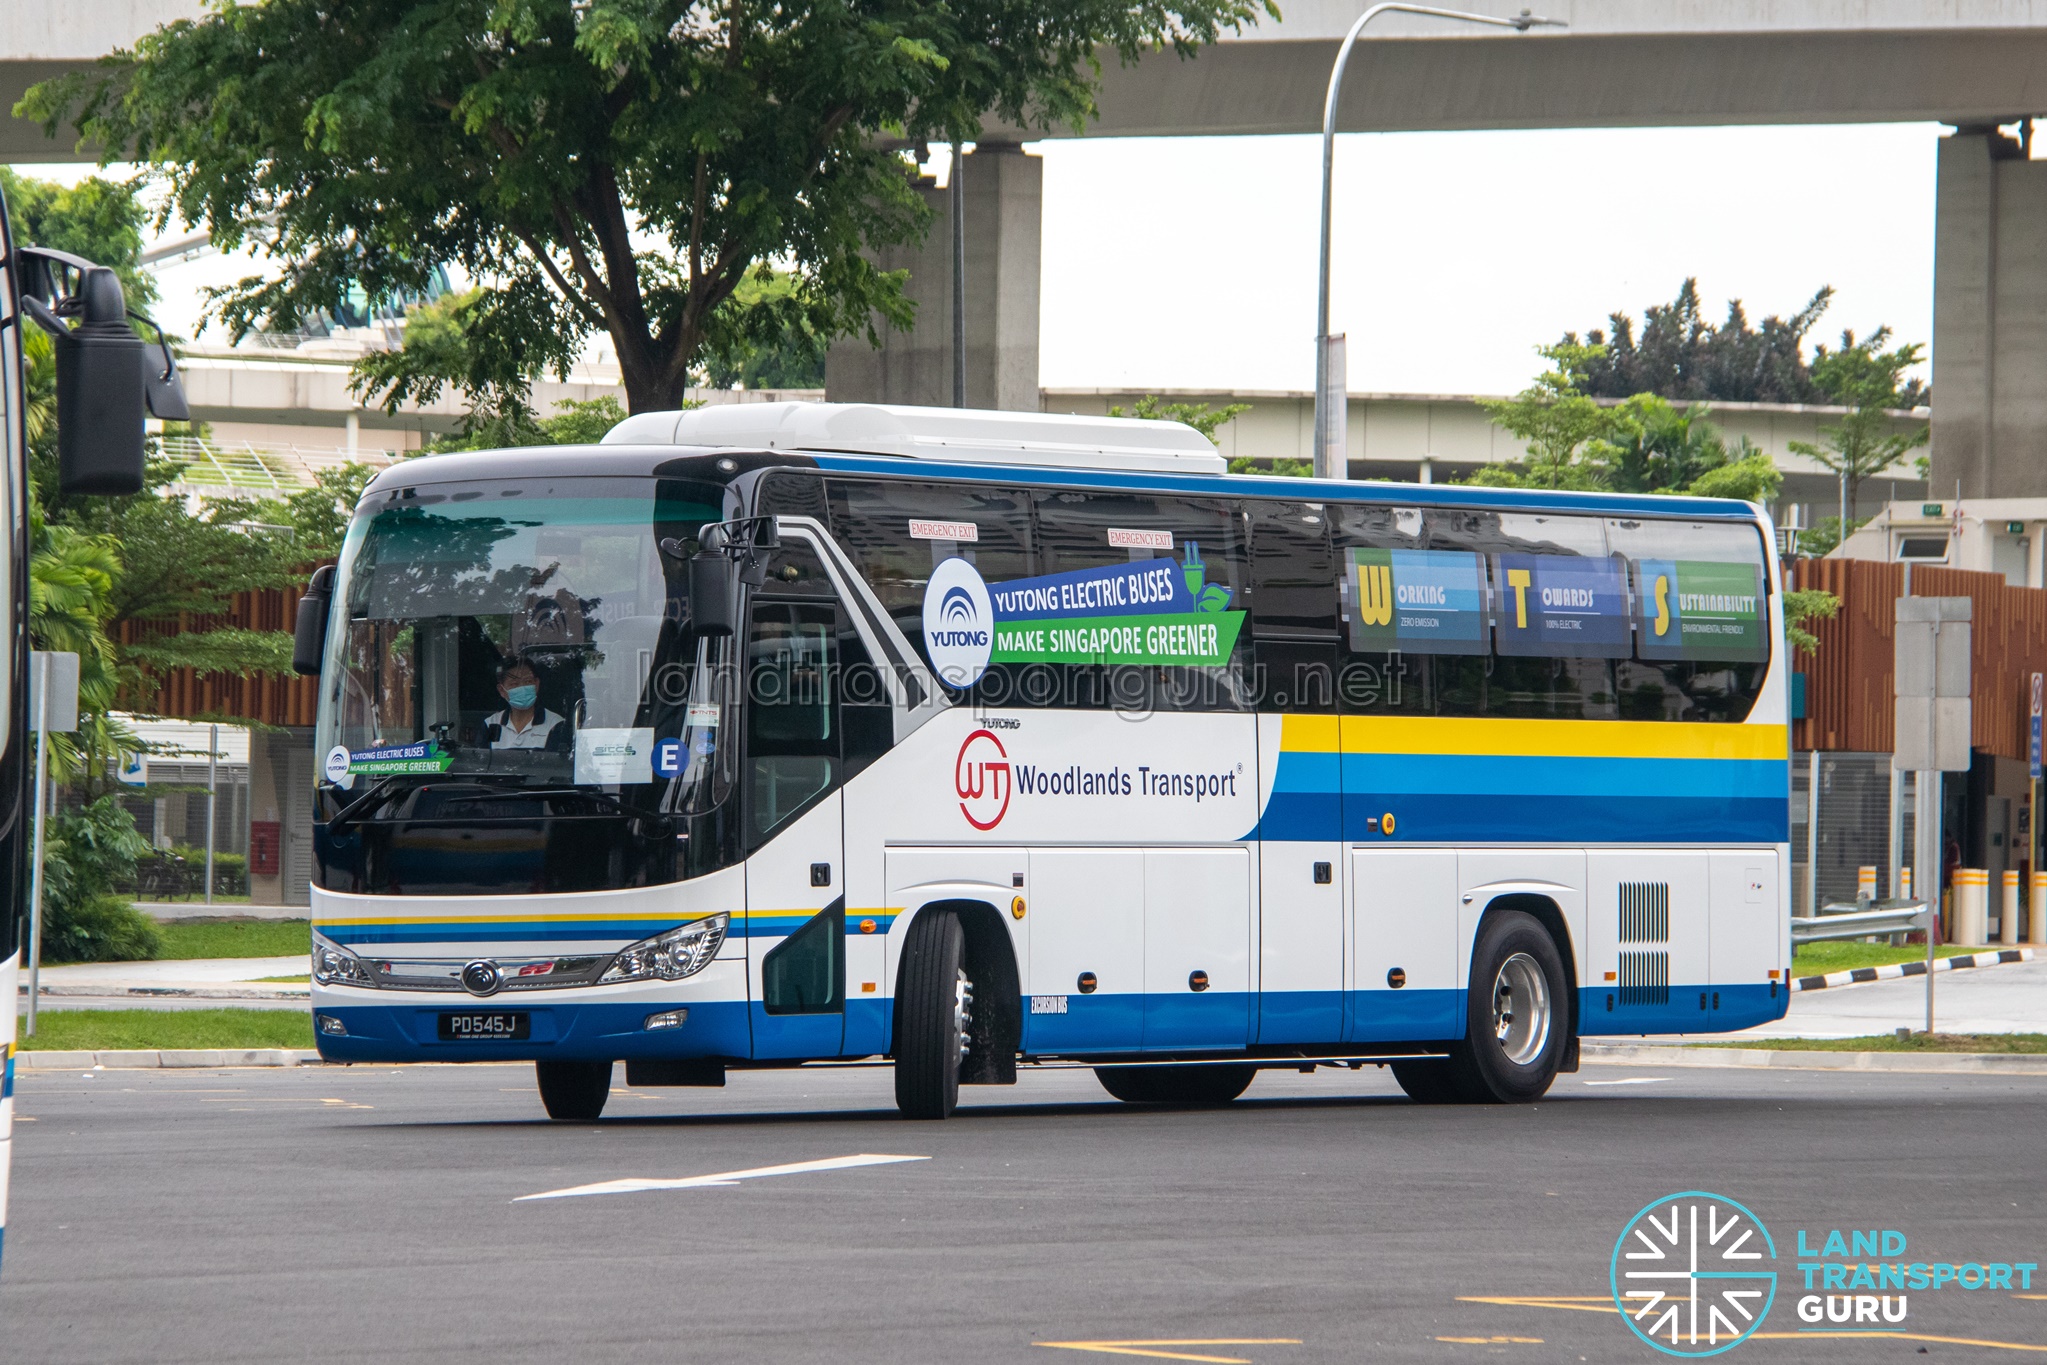 Yutong E11 Electric Bus